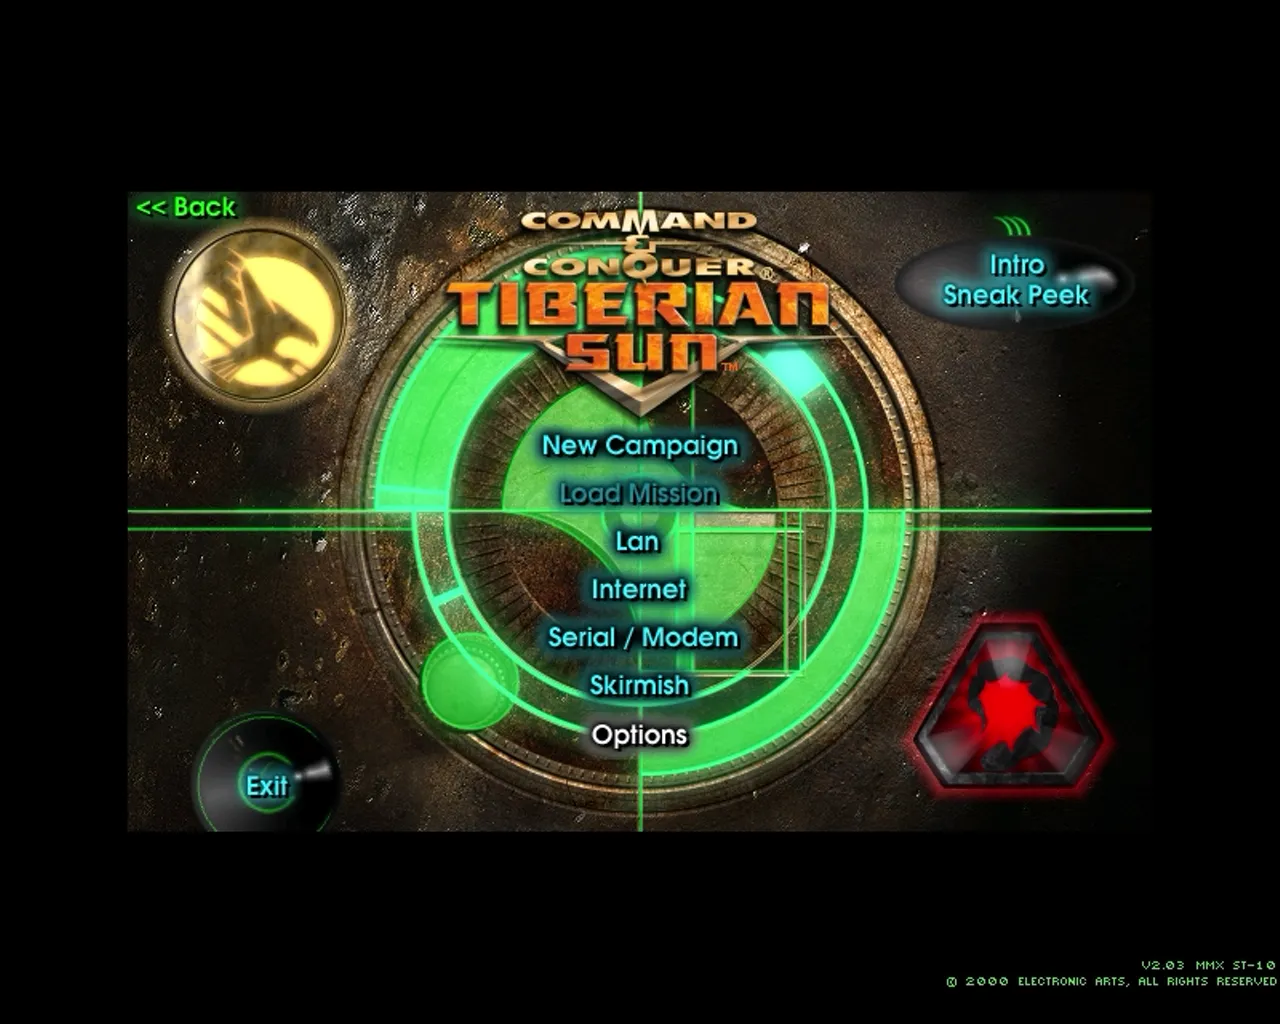 Command & Conquer: Tiberian Sun and Firestorm for Windows 10